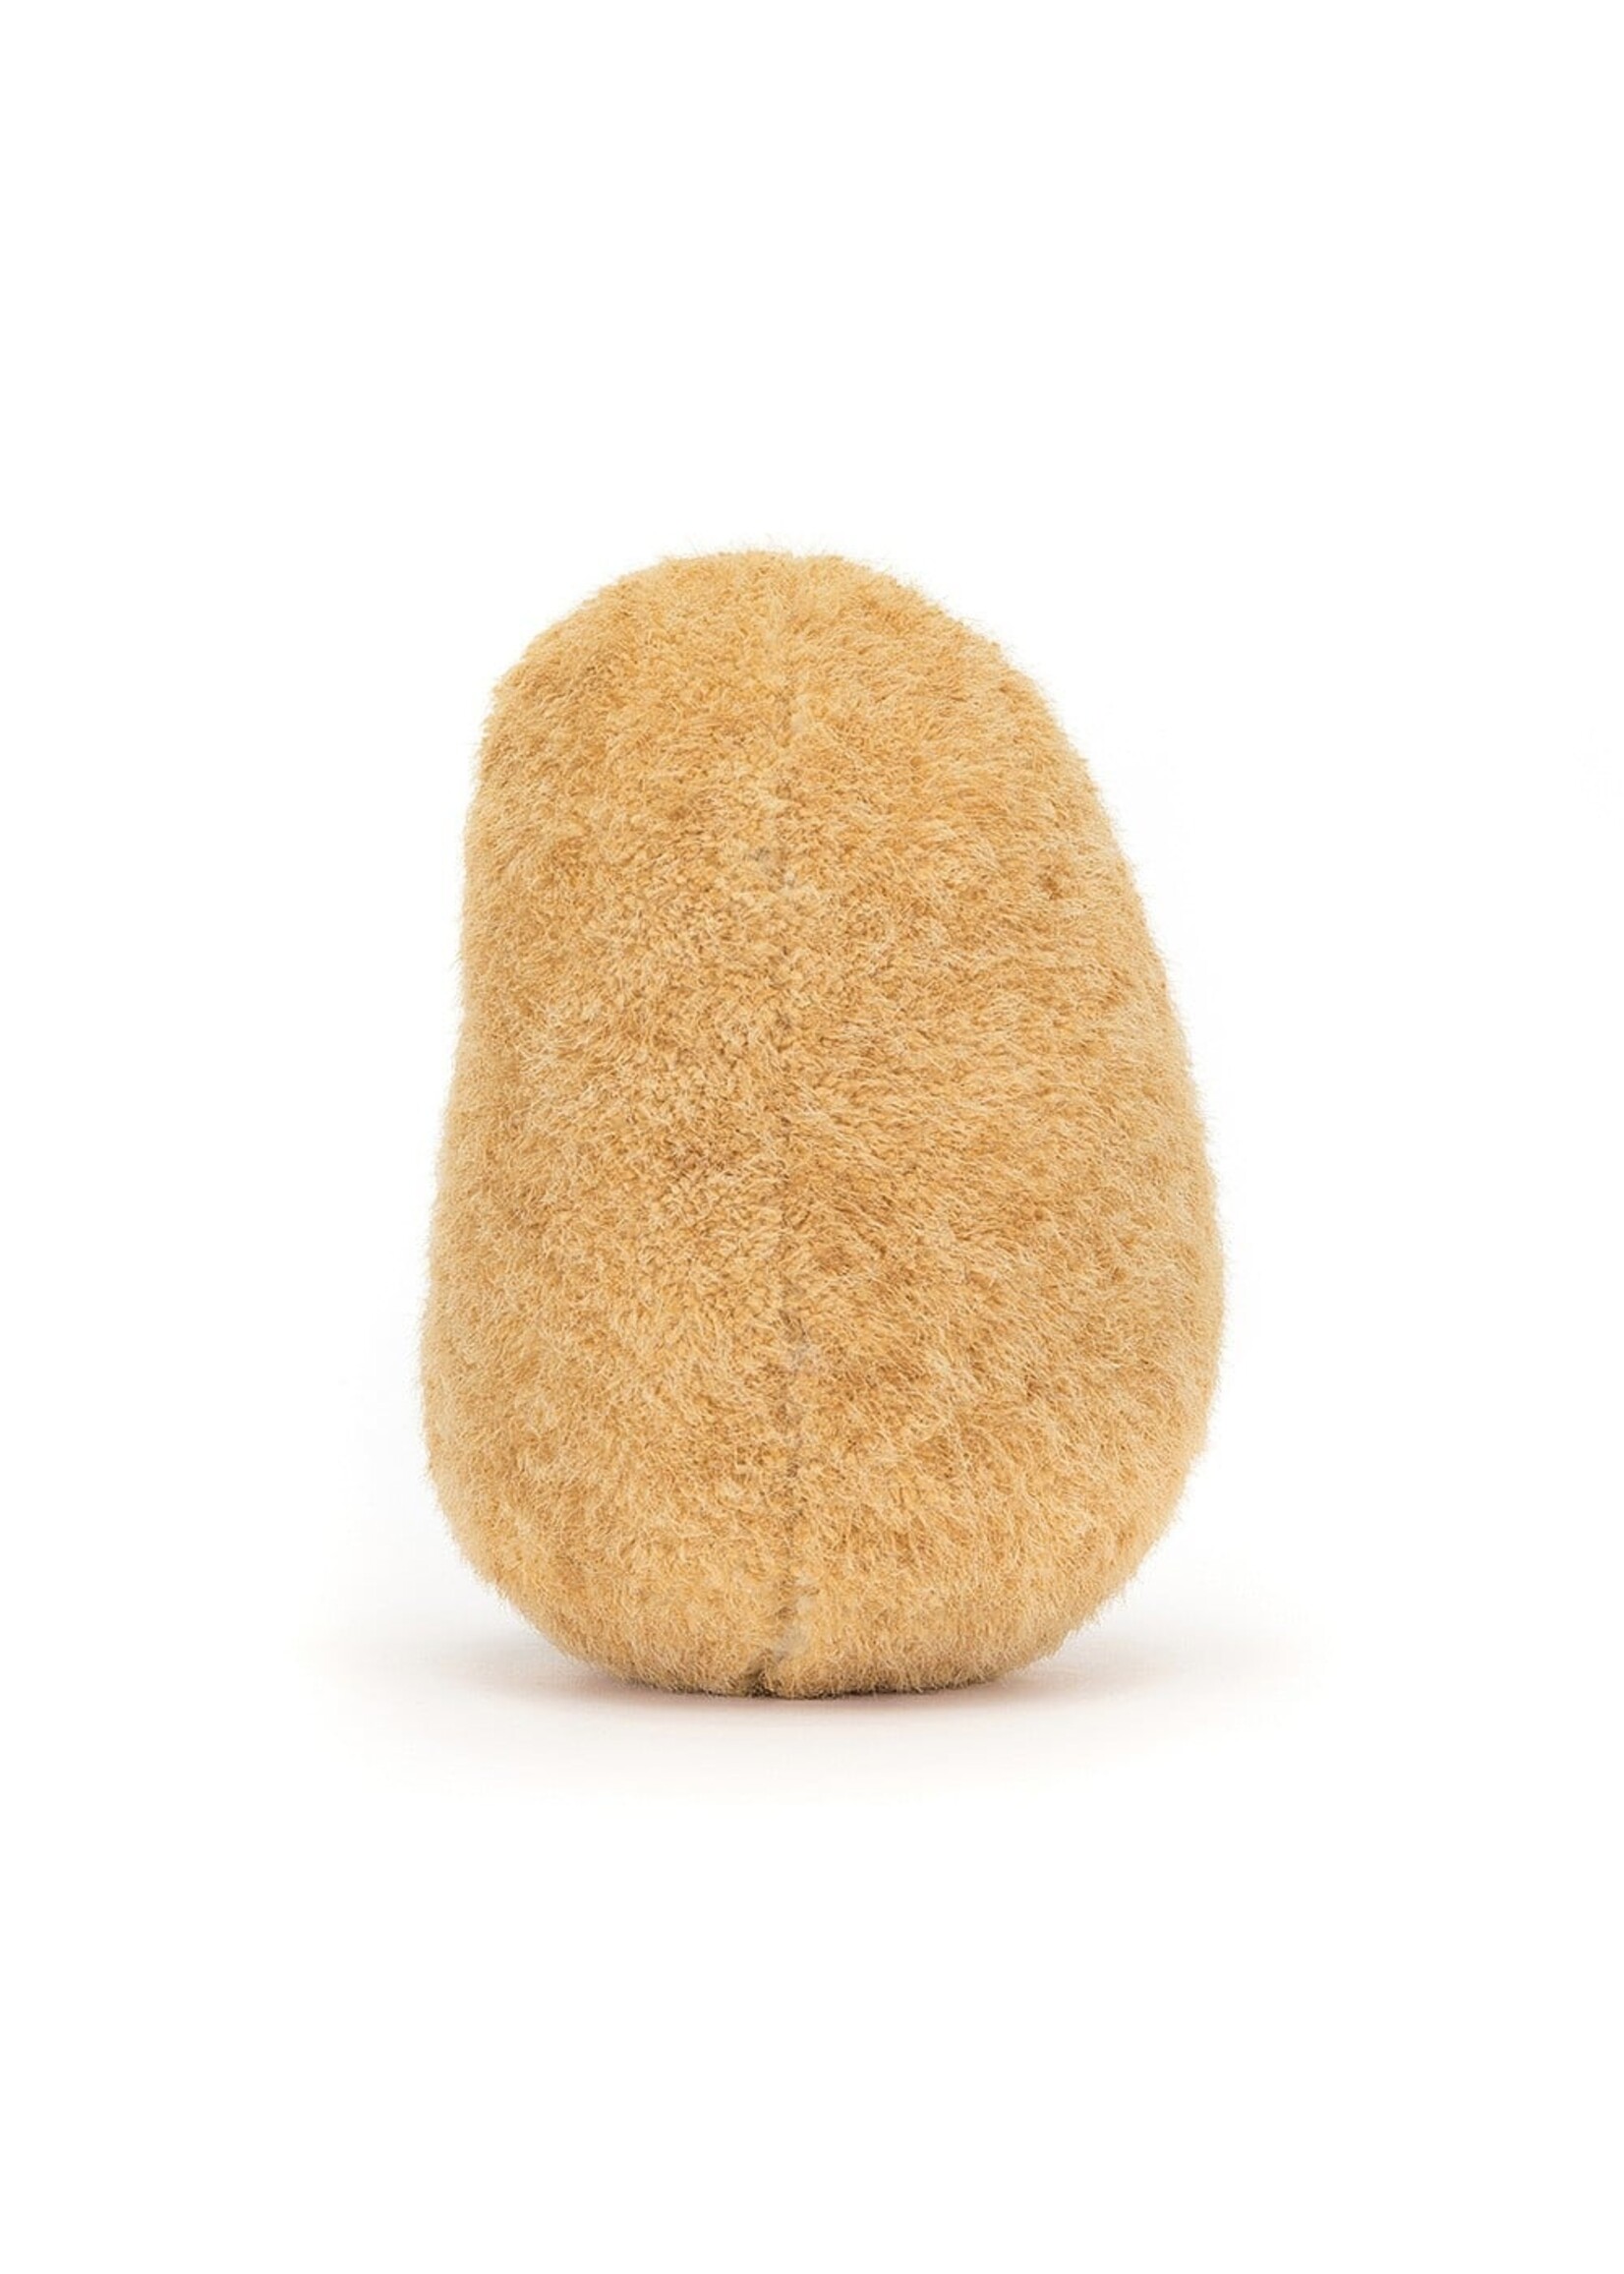 Jellycat Amuseable Potato